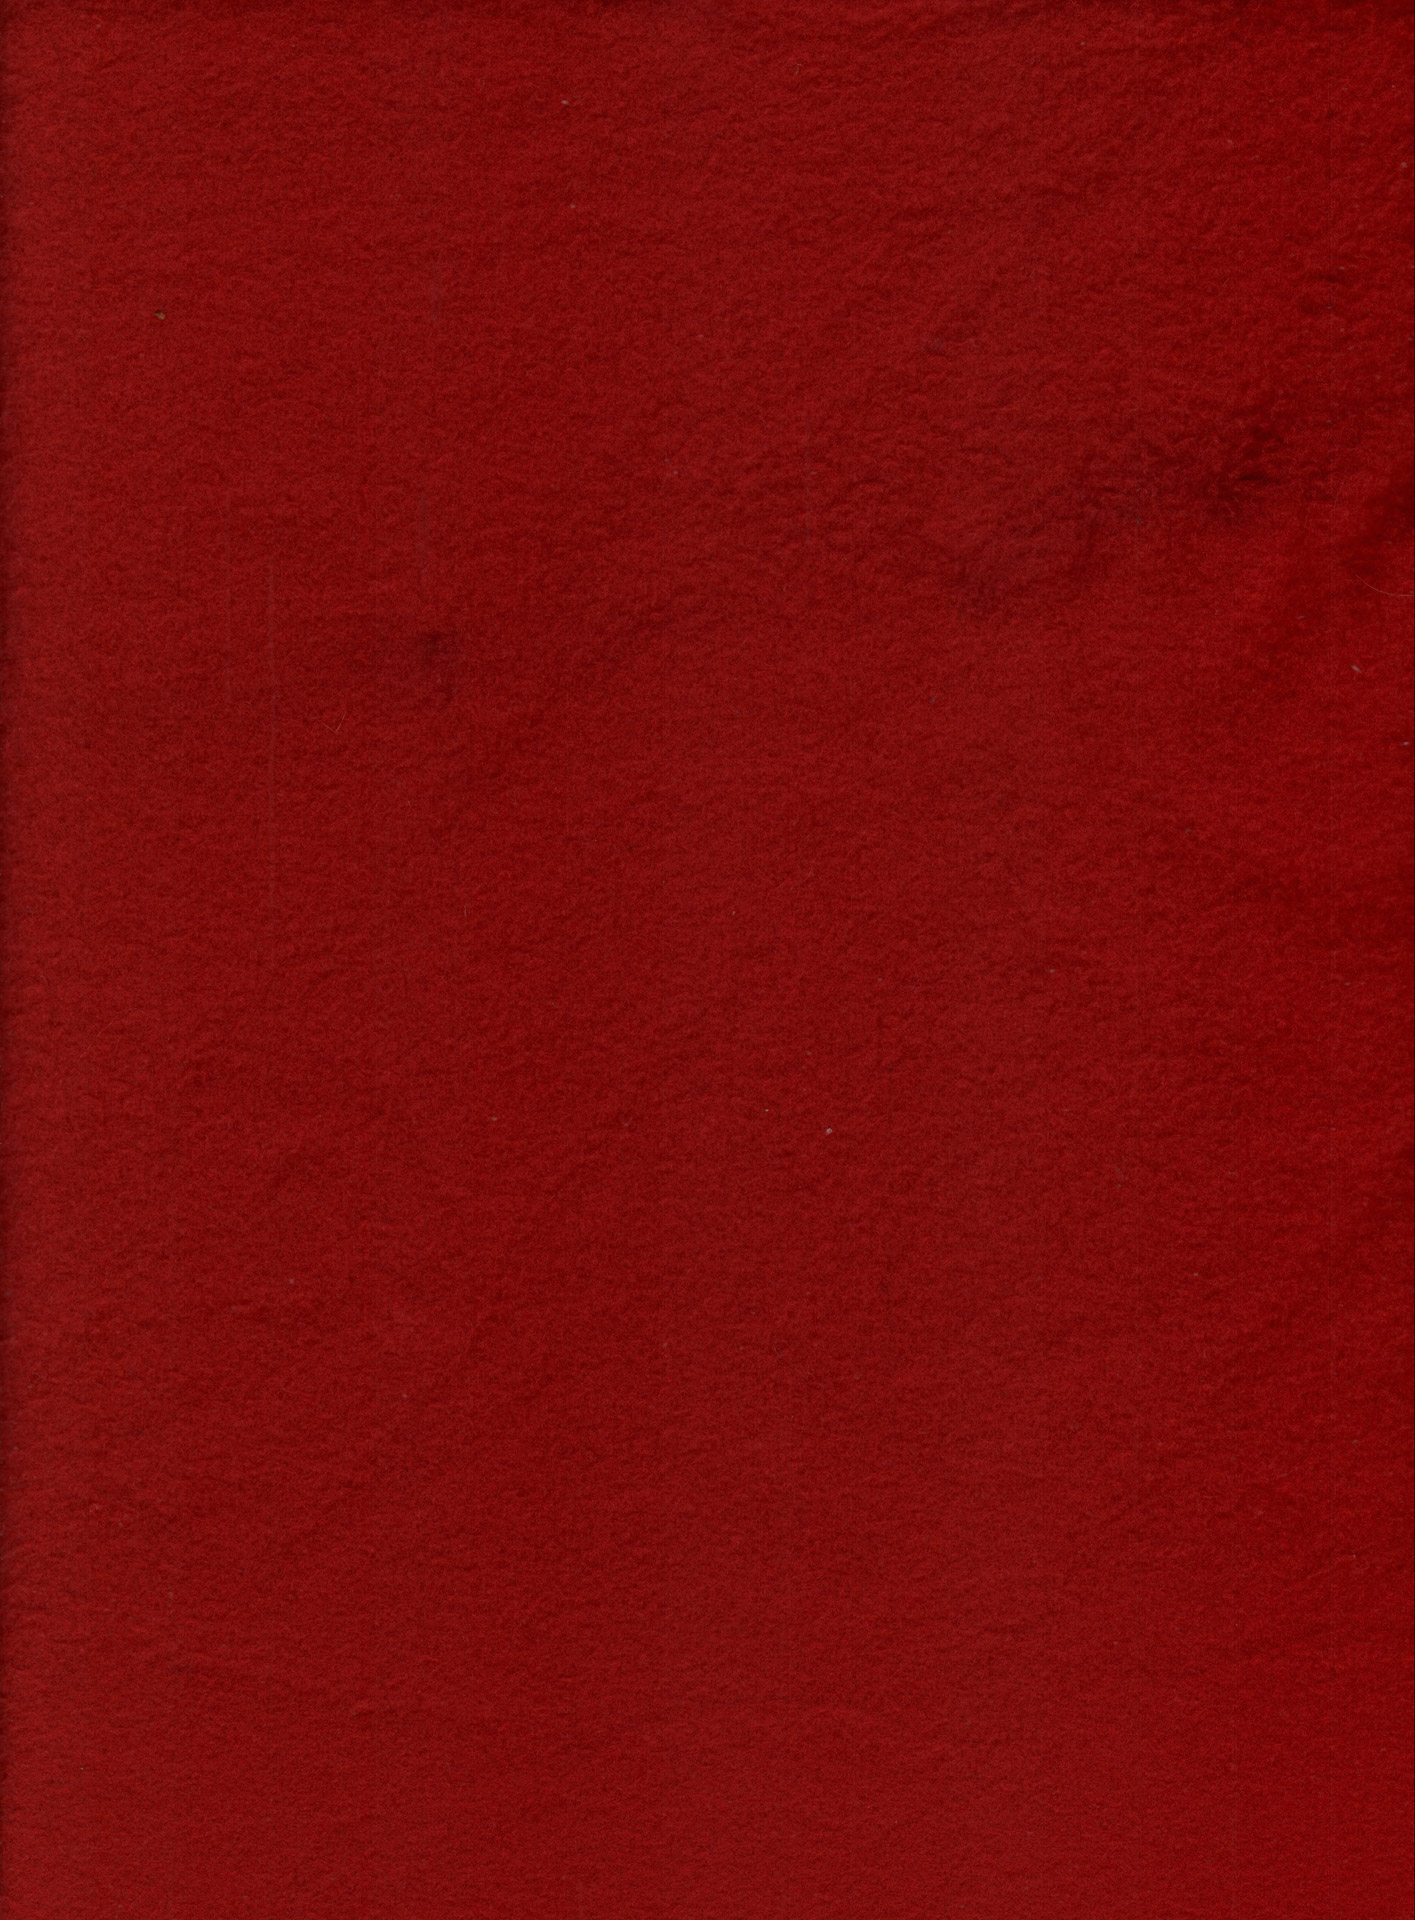 red wardrobe cloth free photo